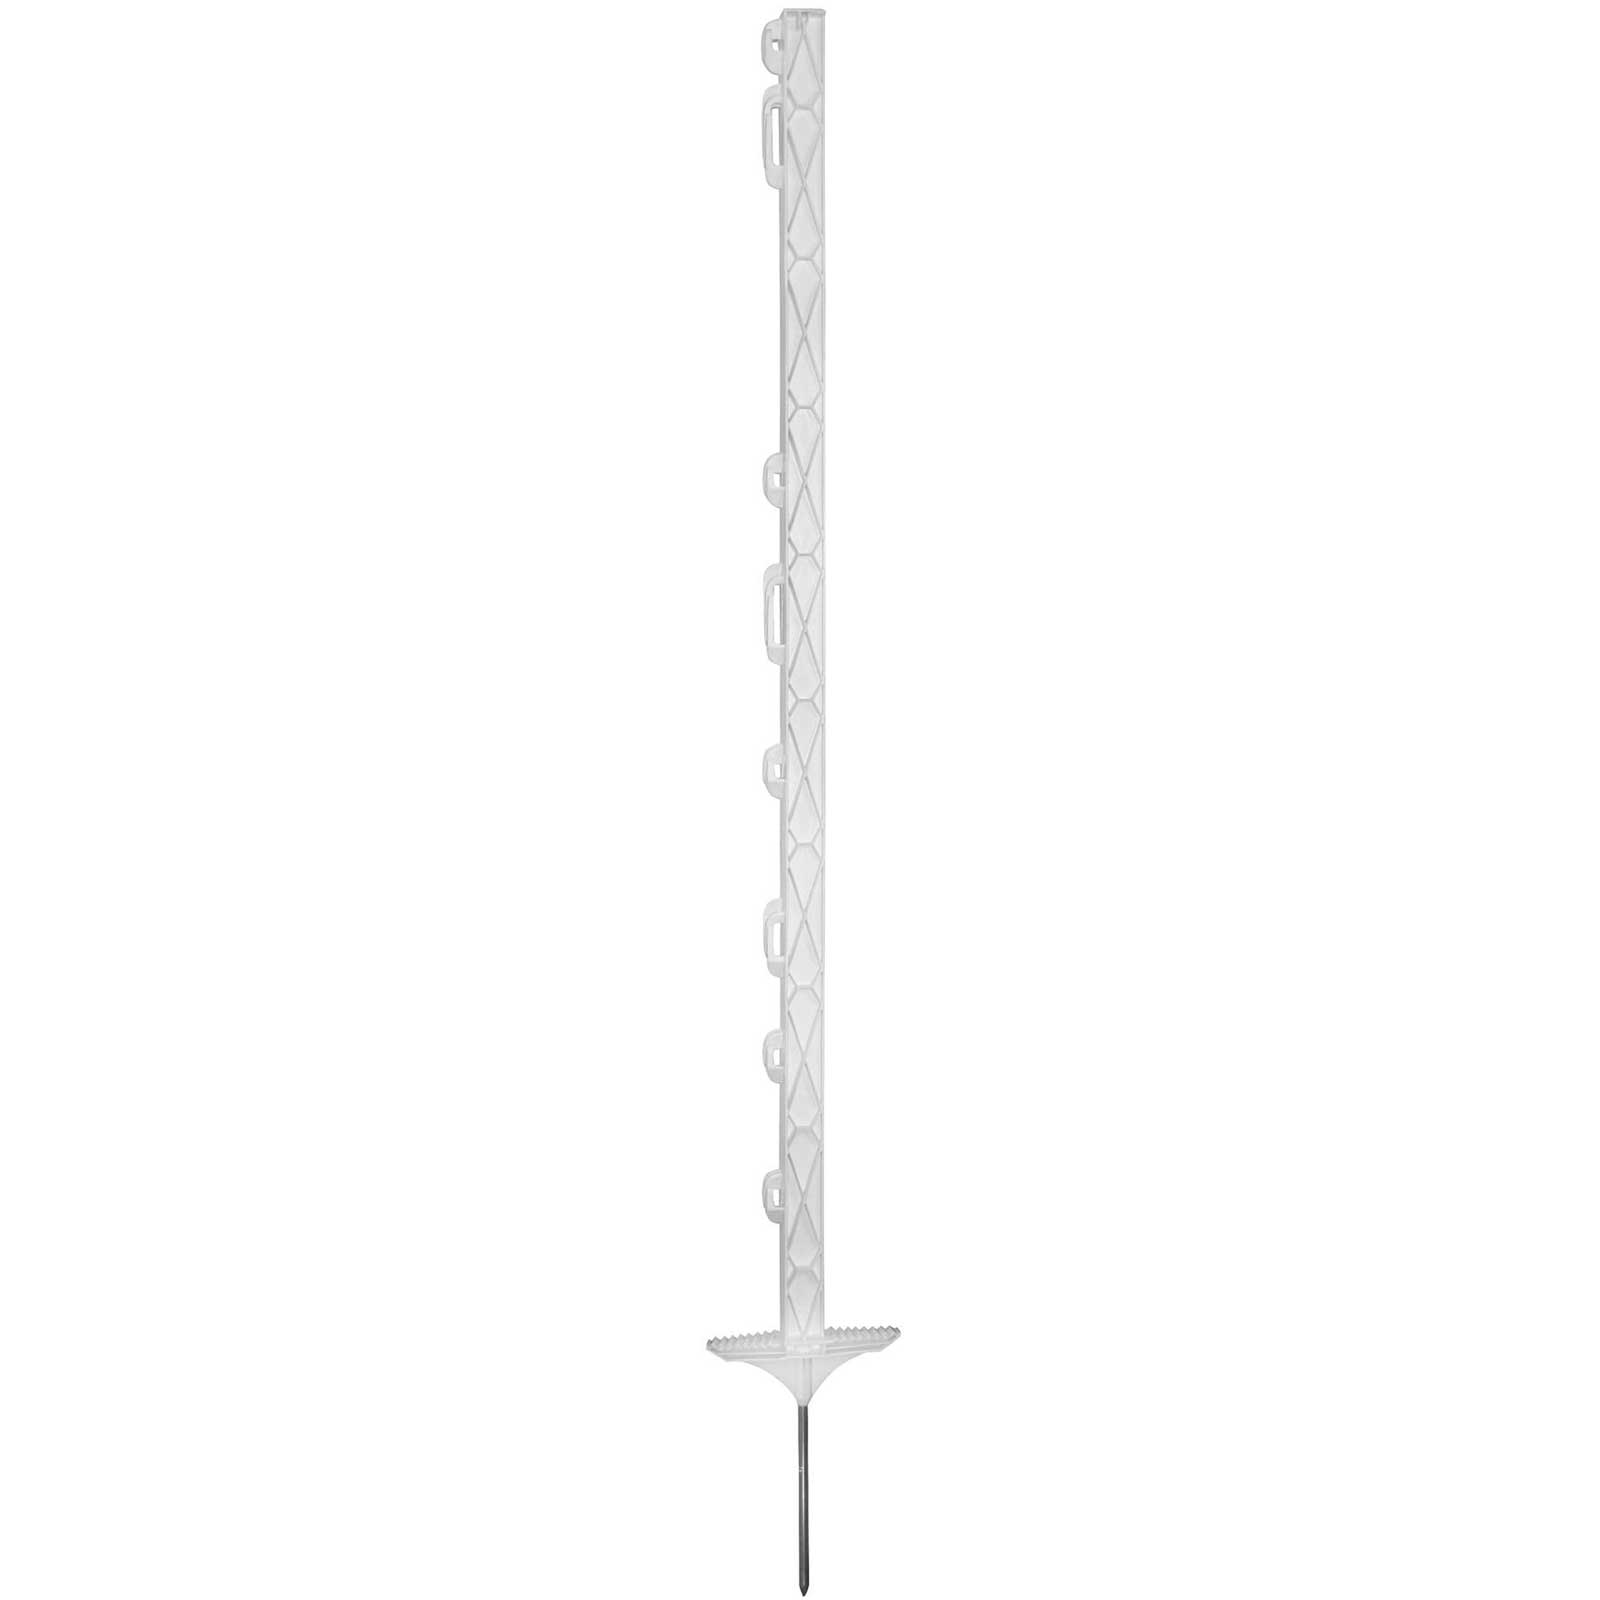 Plastic Post Titan 110 cm Doublestep, white (5 pcs.)